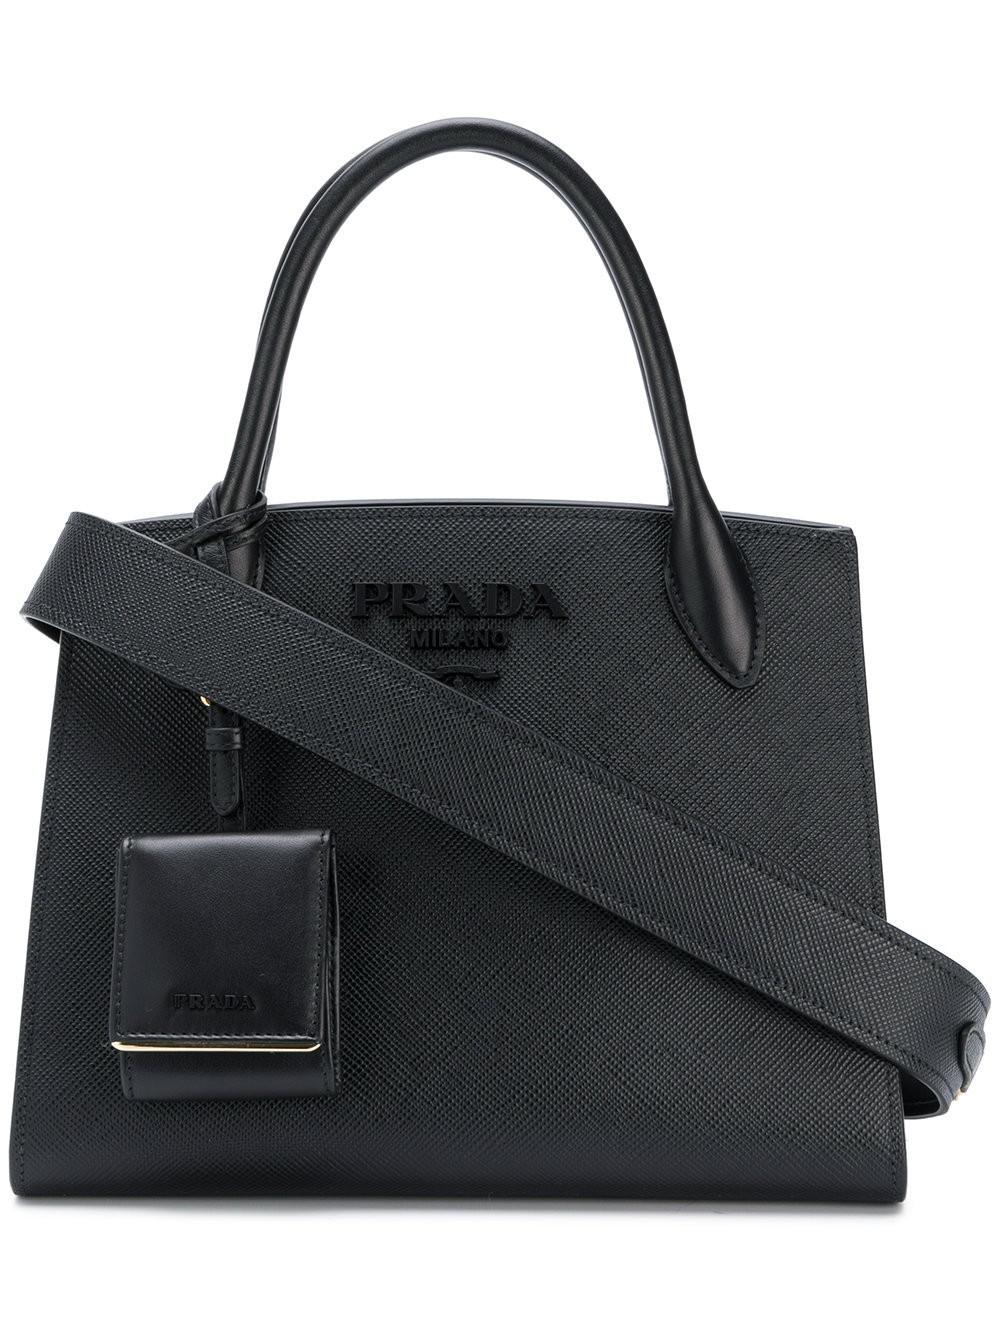 Marc Jacobs Green Snapshot Small Camera Bag - Meghan Markle's Handbags -  Meghan's Fashion